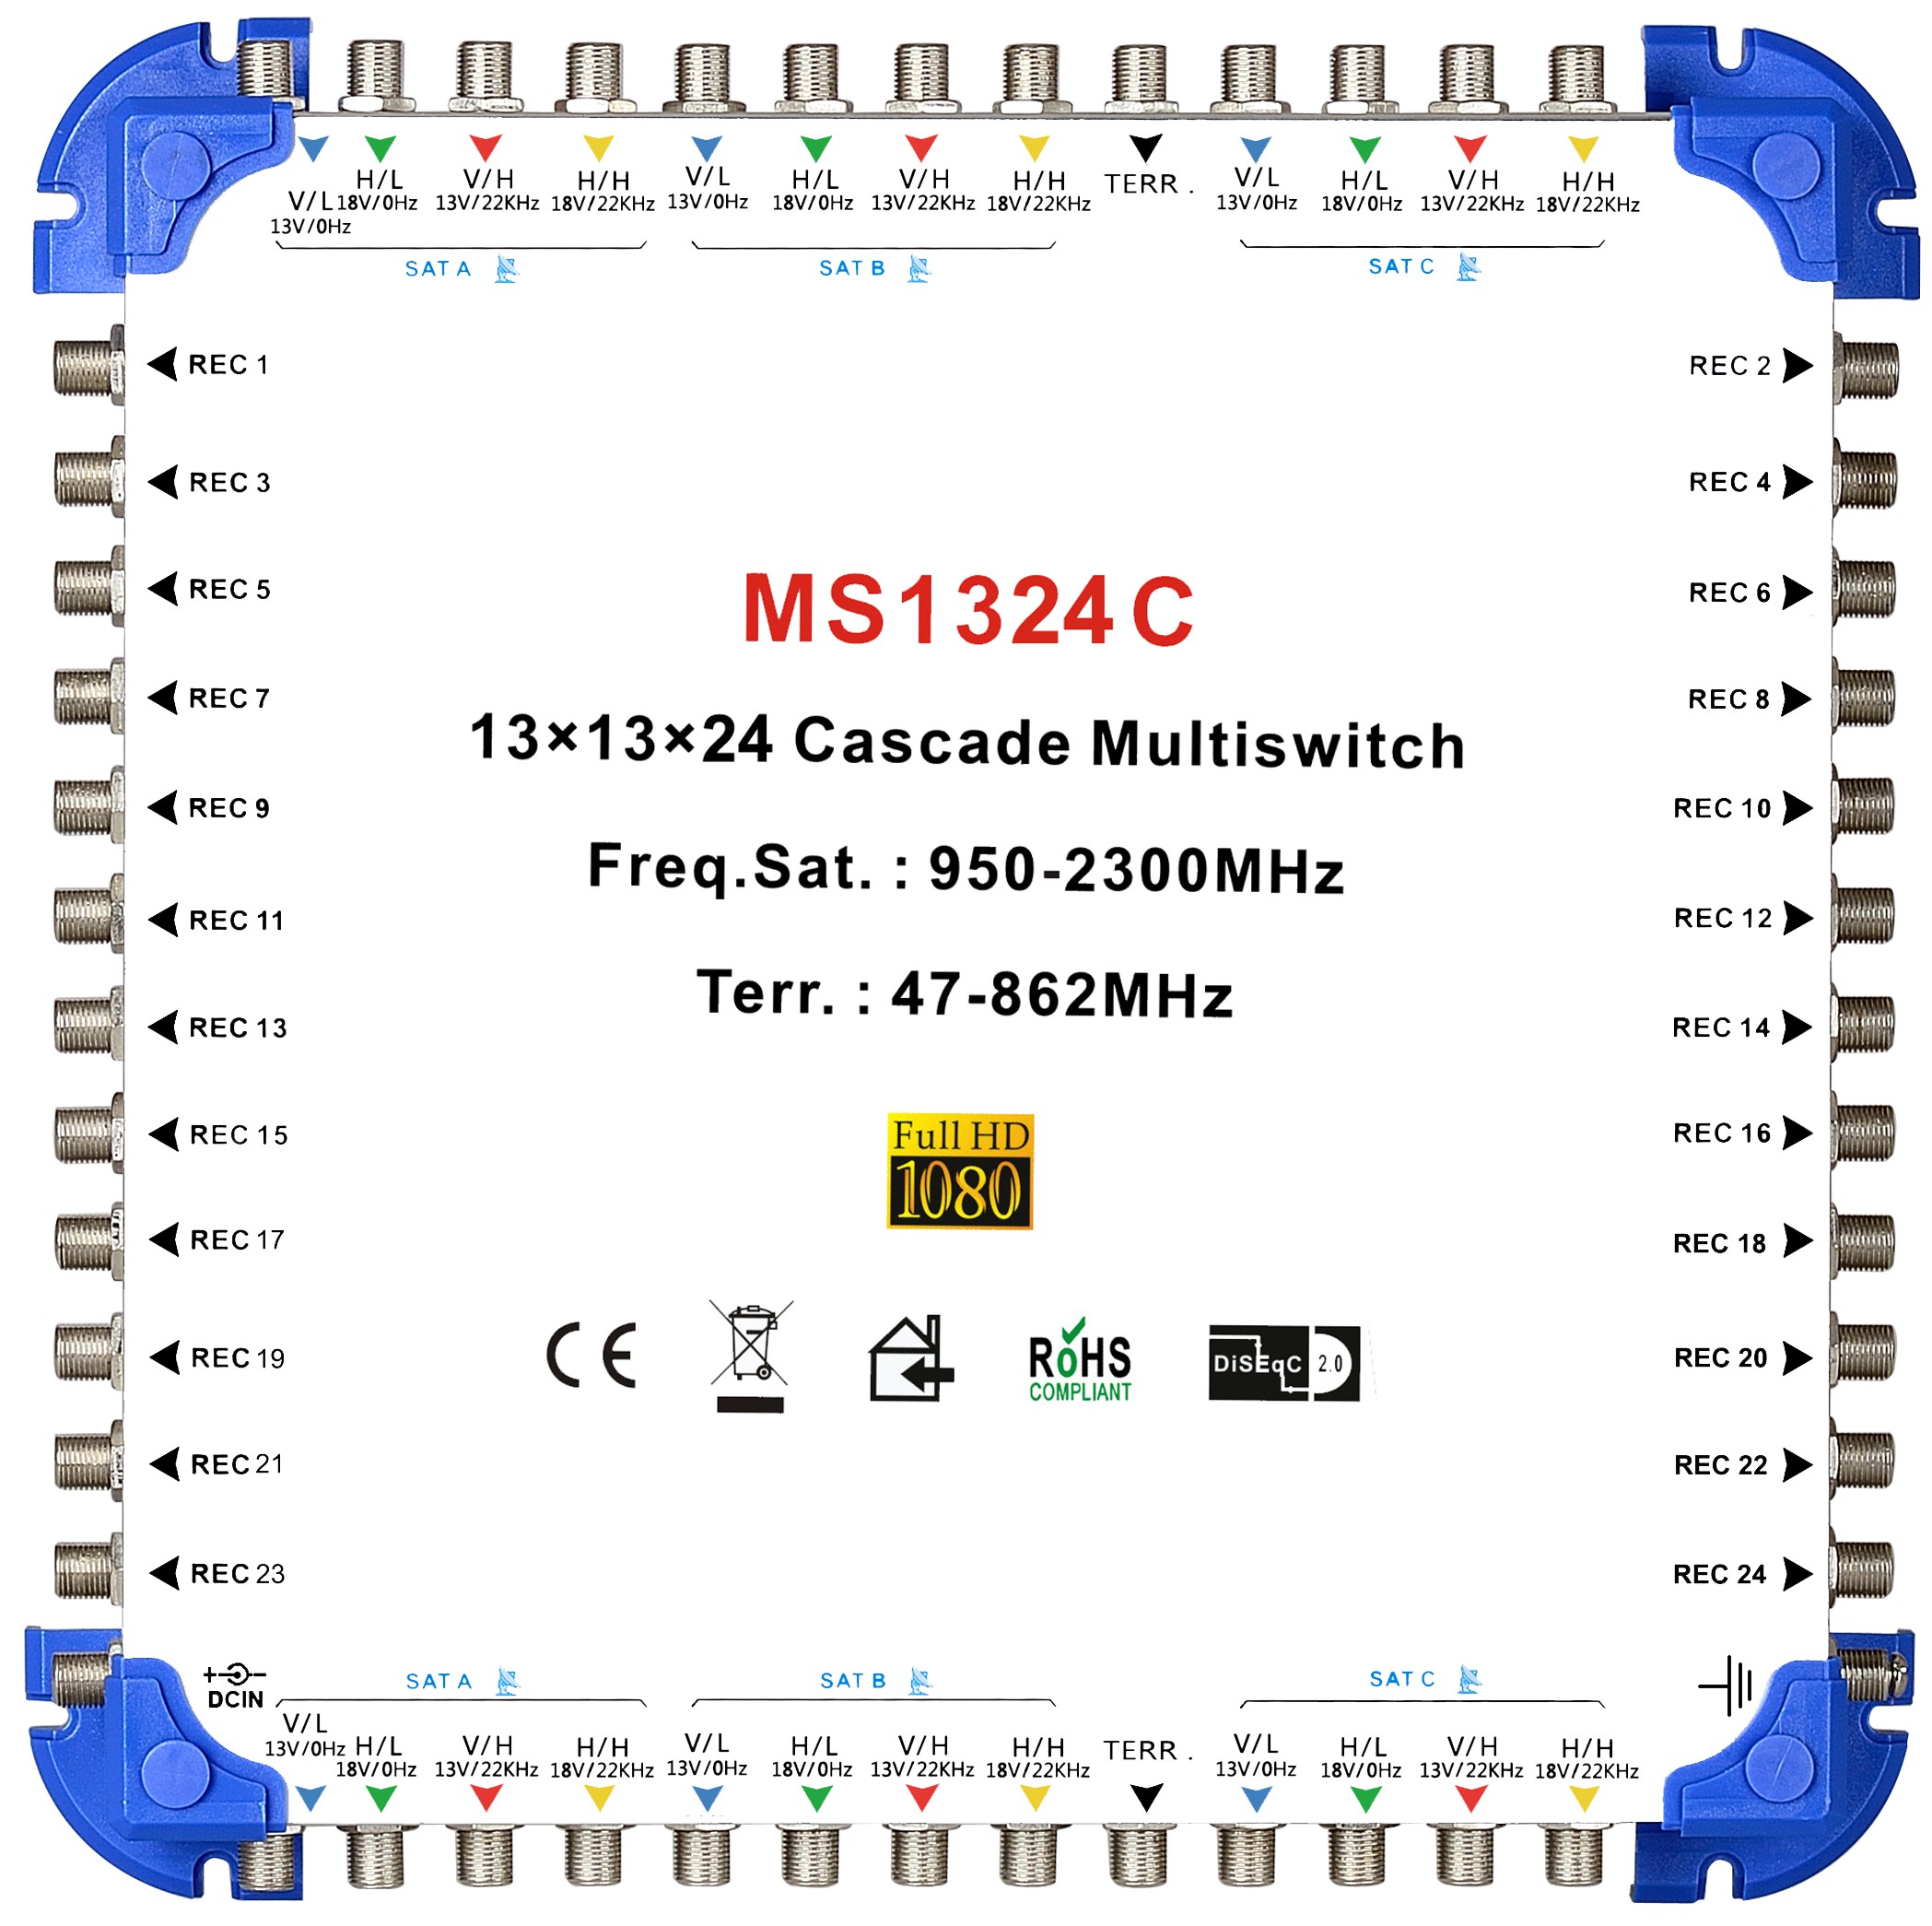 13x24 satellite multi-switch, Cascade multiswitch